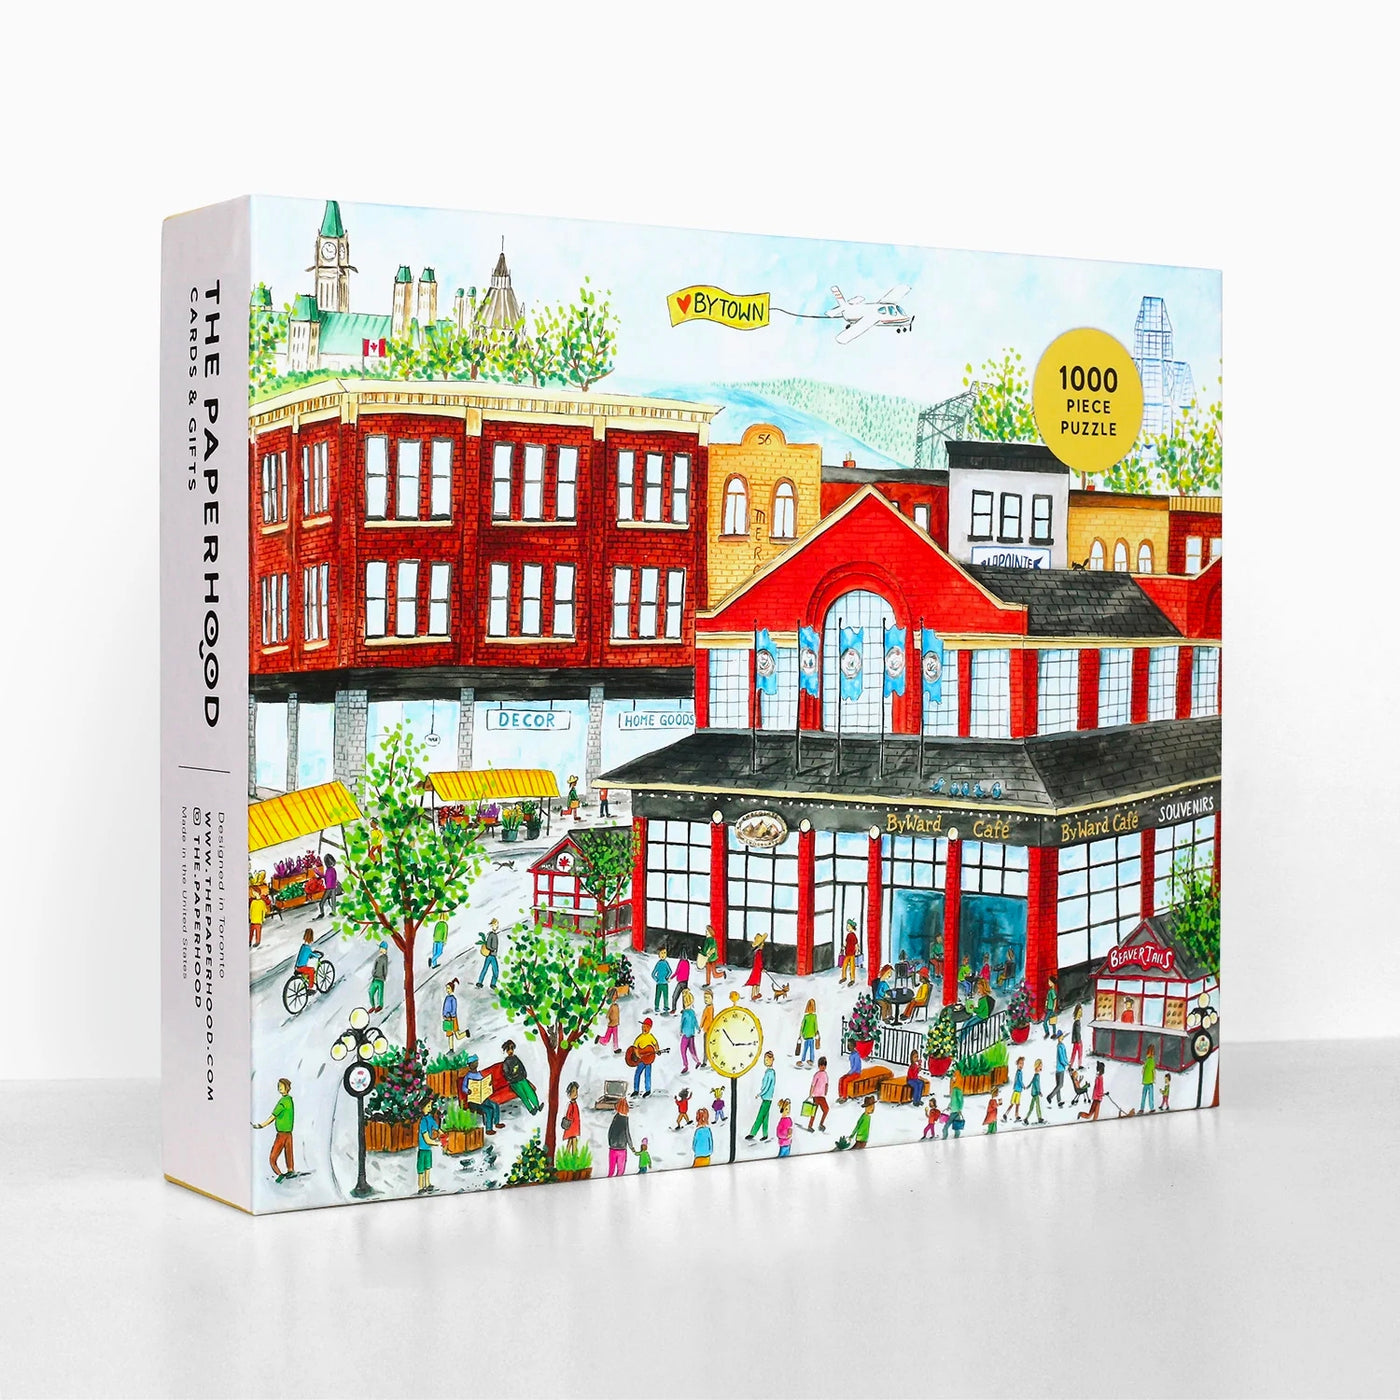 Ottawa Byward Market | 1,000 Piece Jigsaw Puzzle